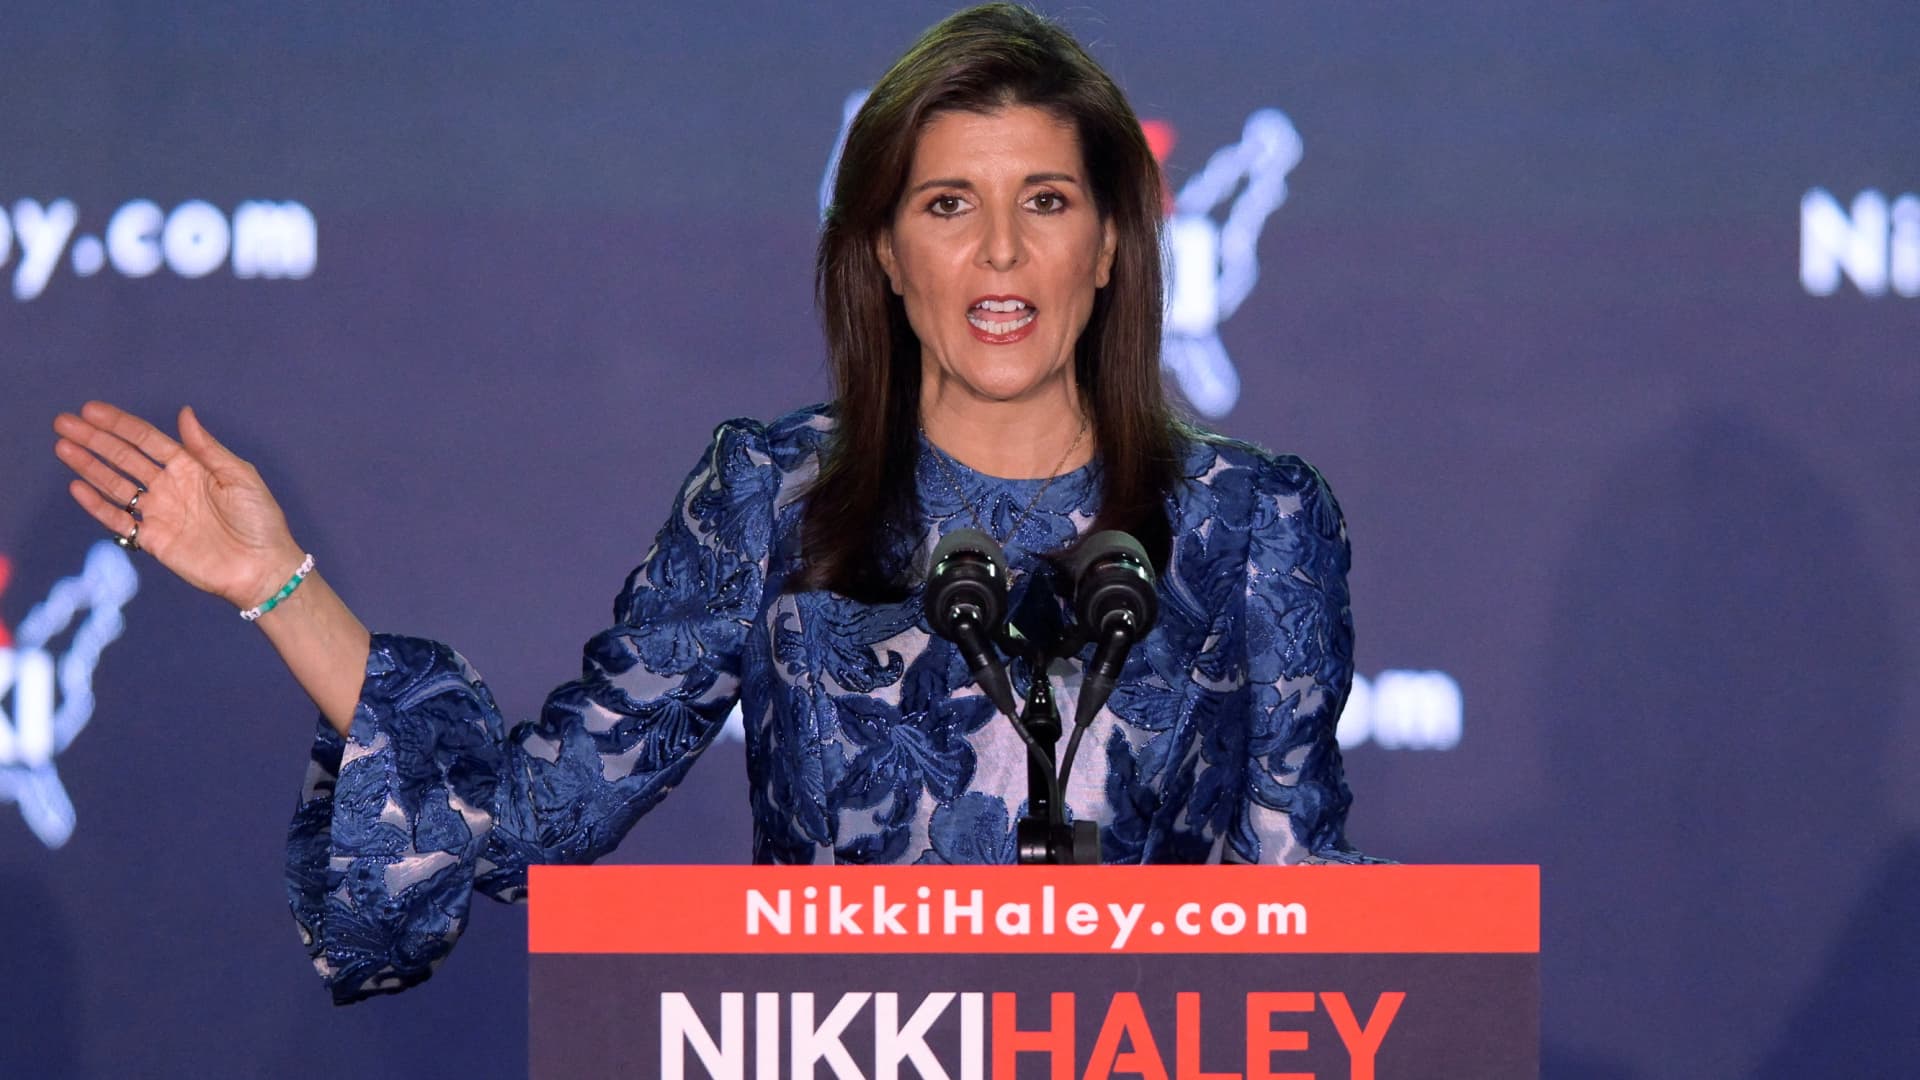 Nikki Haley campaign raised $17 million, has $14 million in the bank